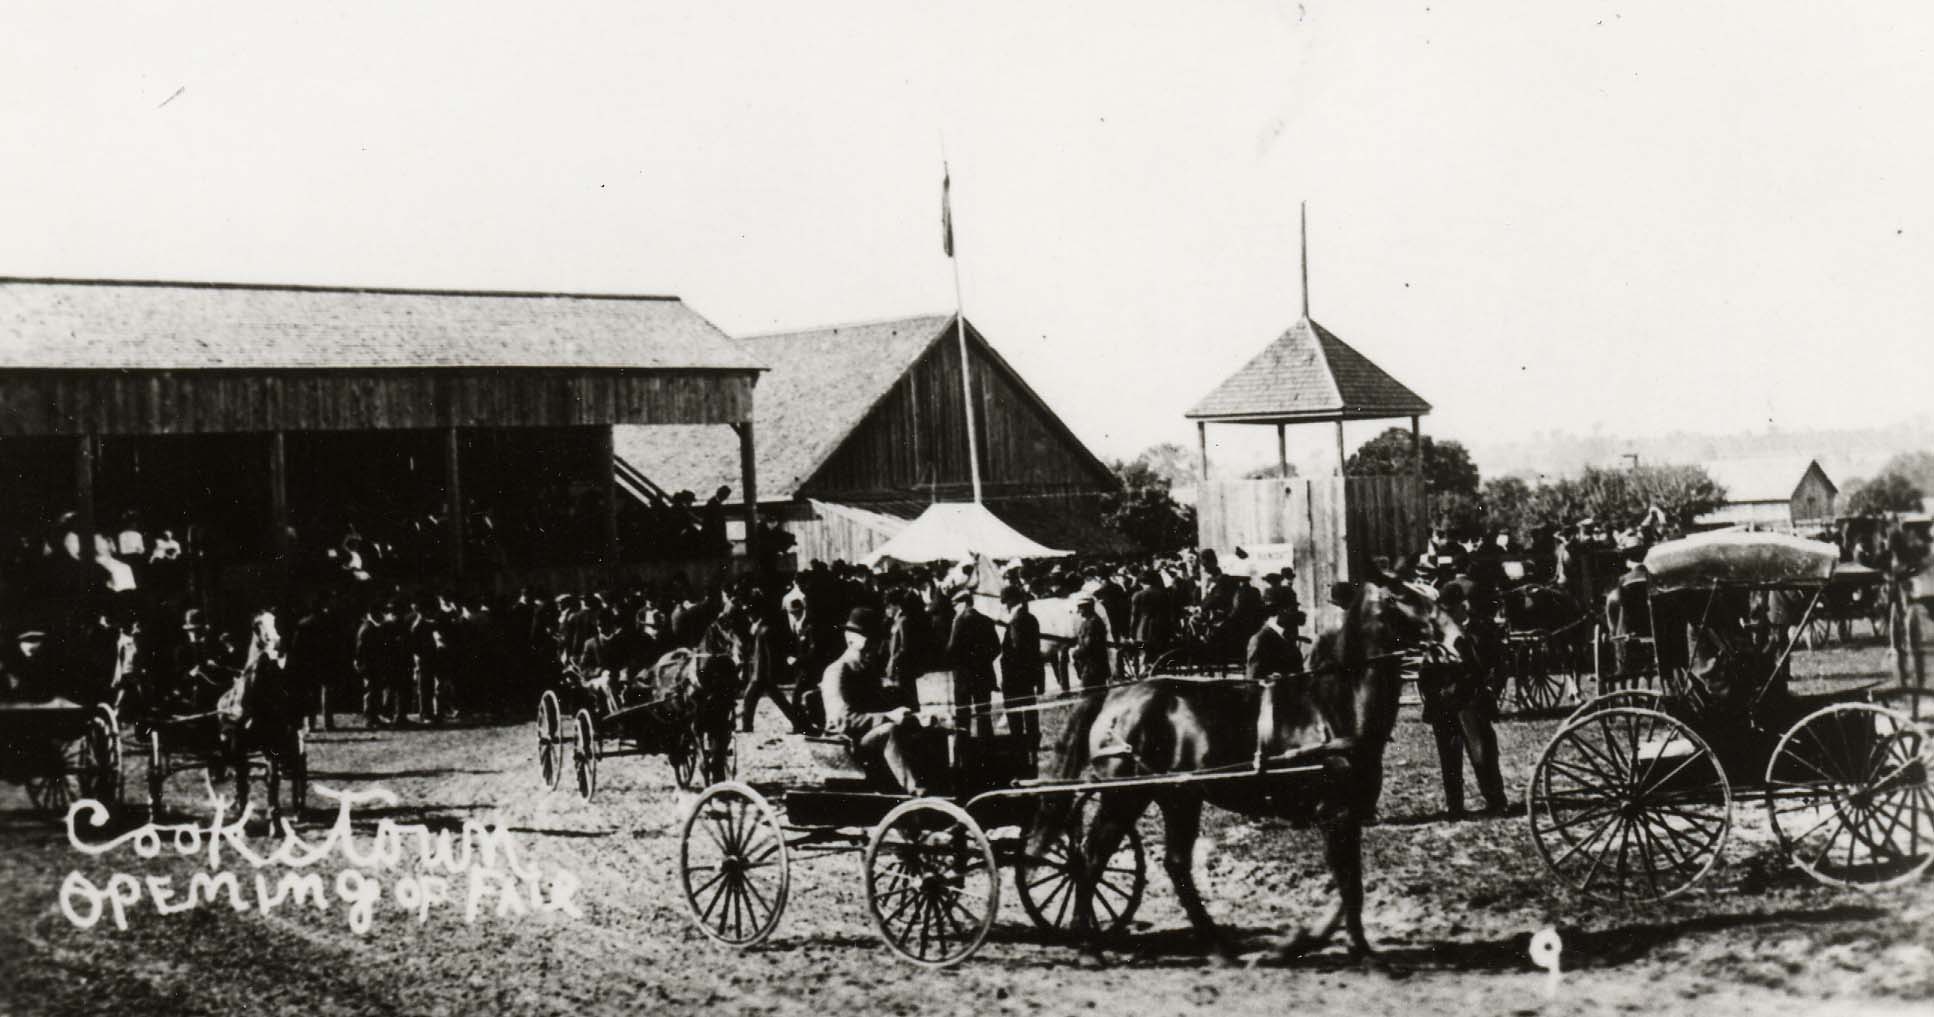 Cookstown Fair Grounds 1912